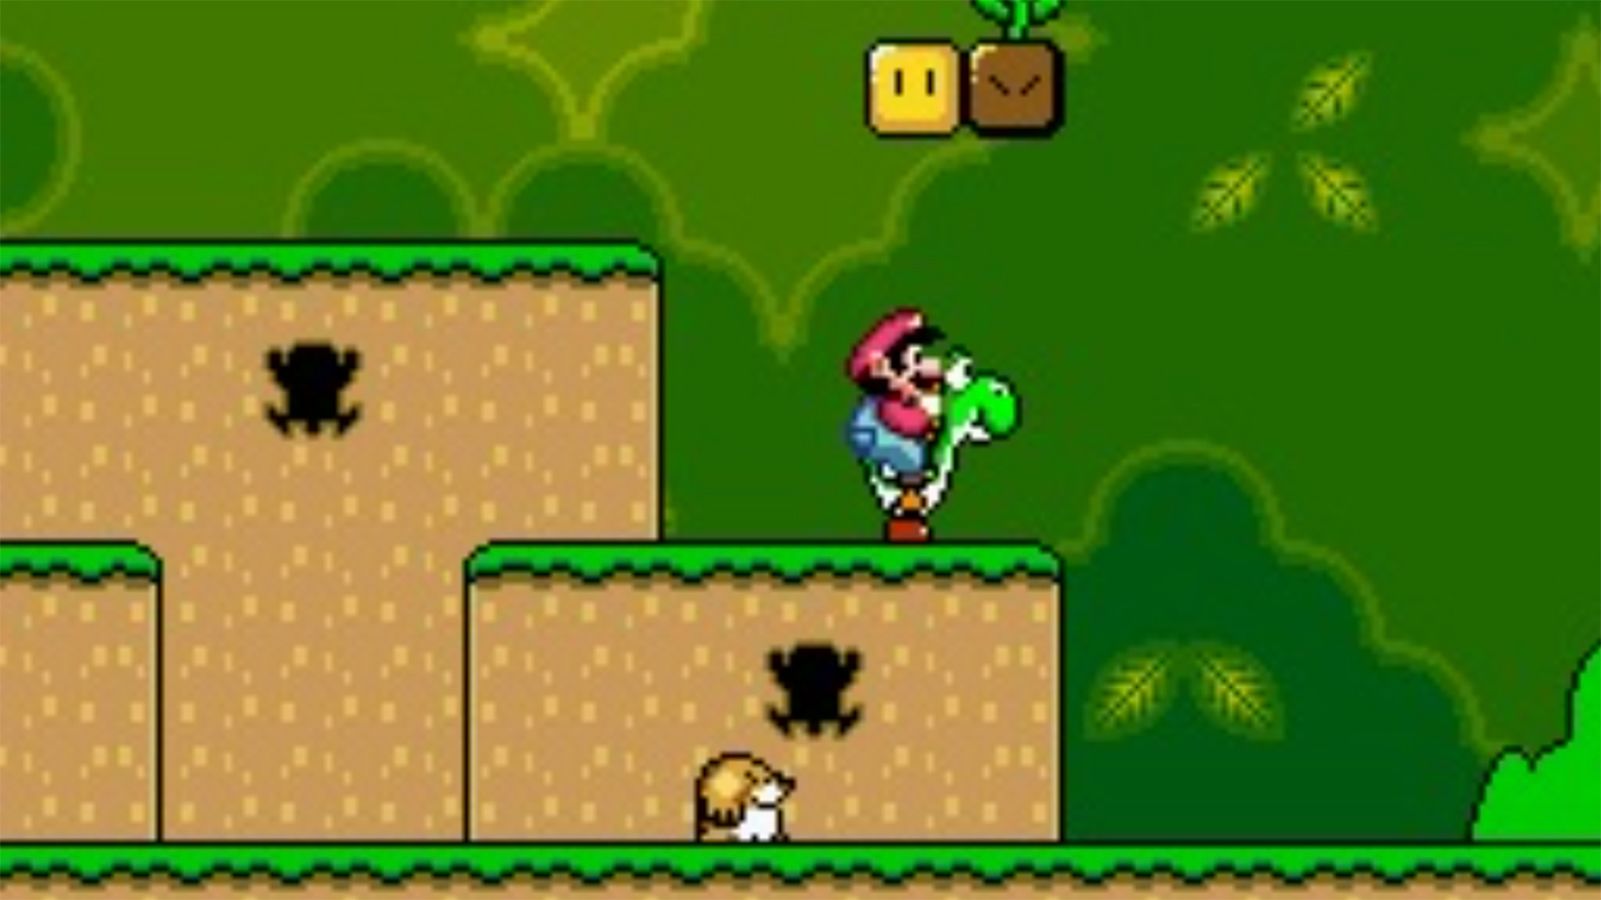 Super Mario World 2: Yoshi's Island (Video Game) - TV Tropes